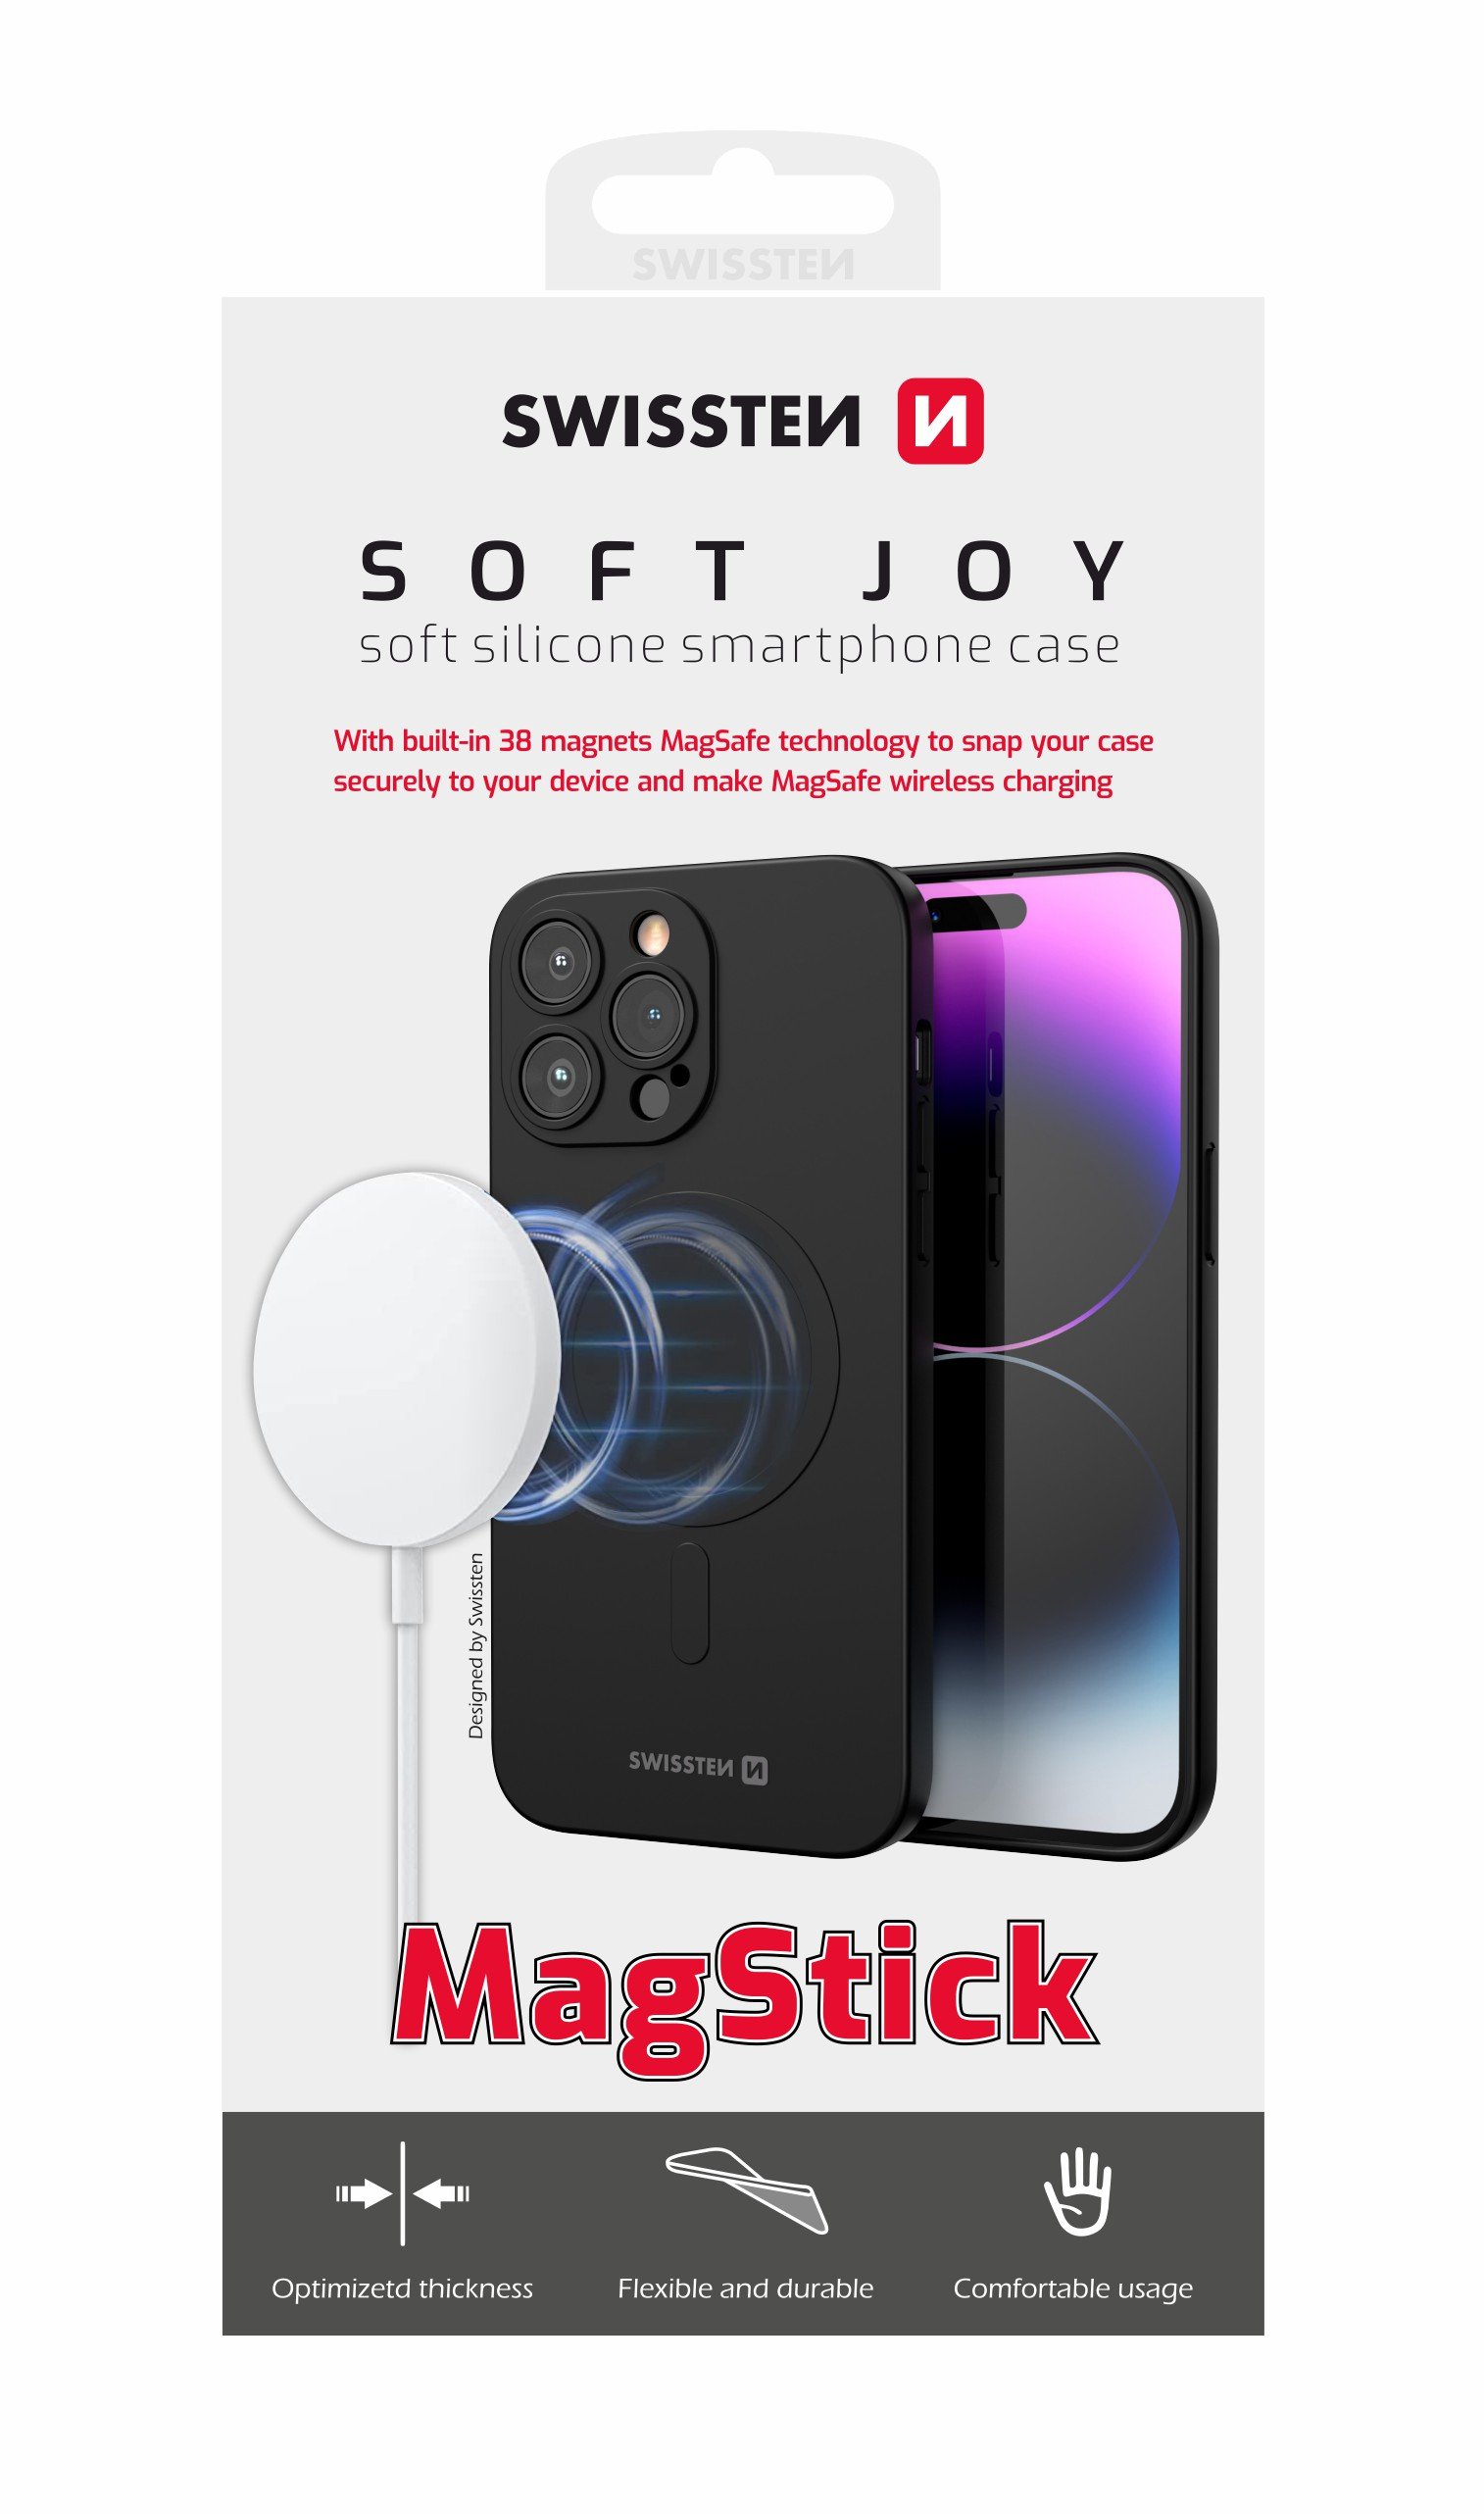 Swissten Soft Joy Magstick Case for Apple iPhone 13 Mini